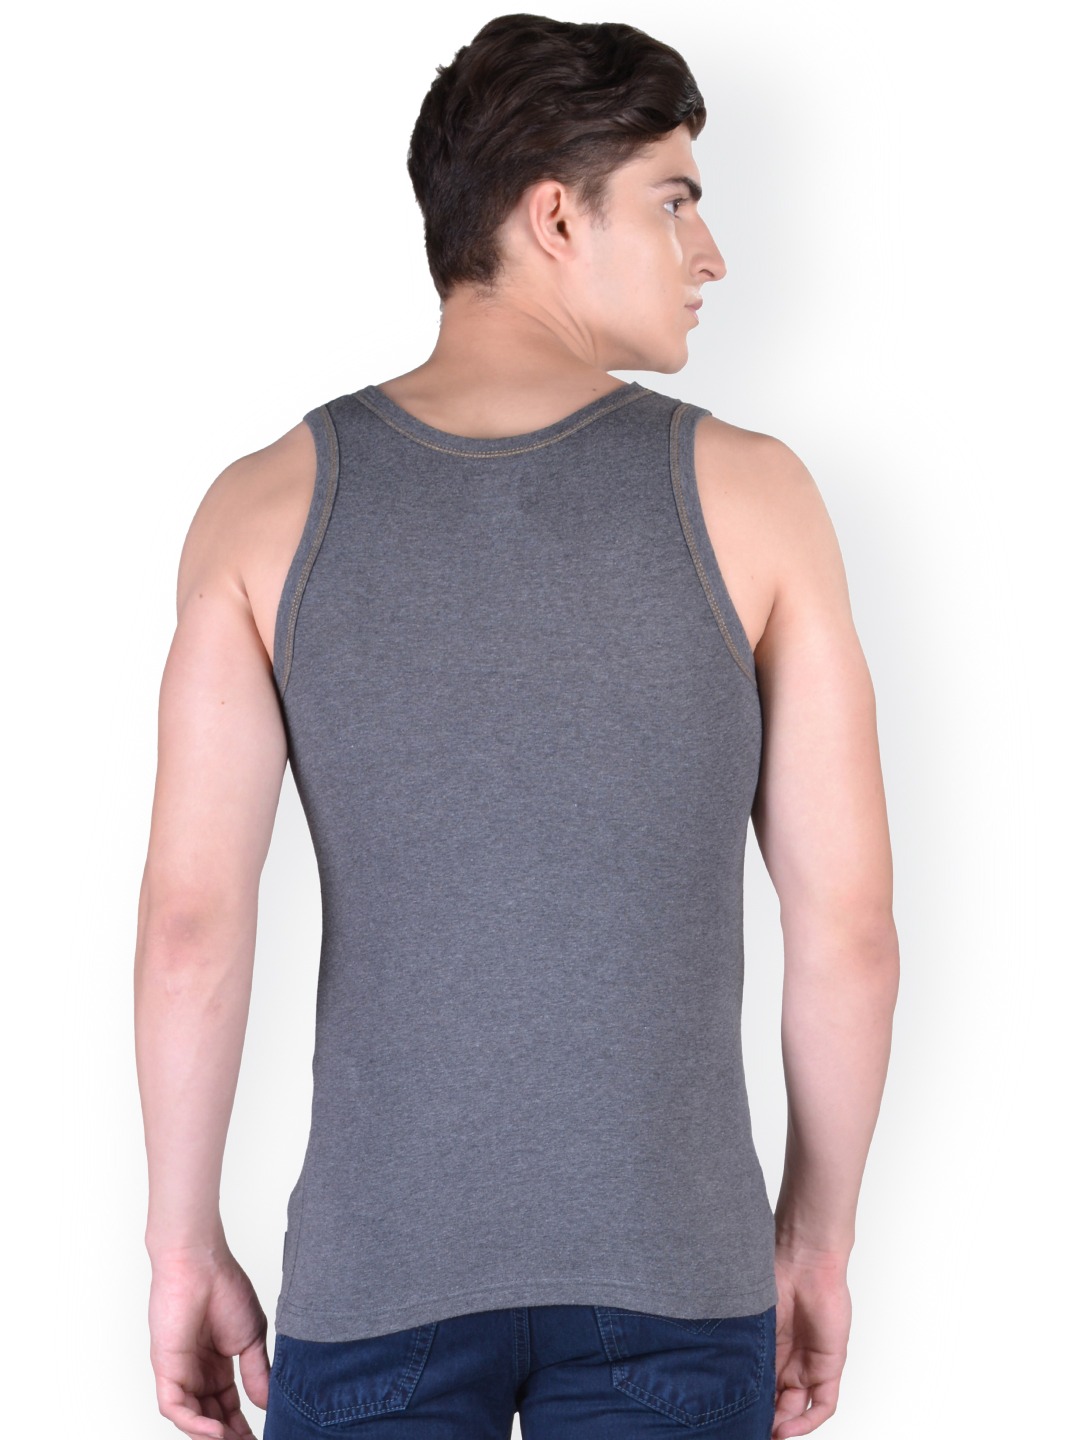 Clothing Innerwear Vests | Force NXT Pack of 2 Printed Assorted Innerwear Vests MNFL-91-po2-dnvm-cm - IK14414